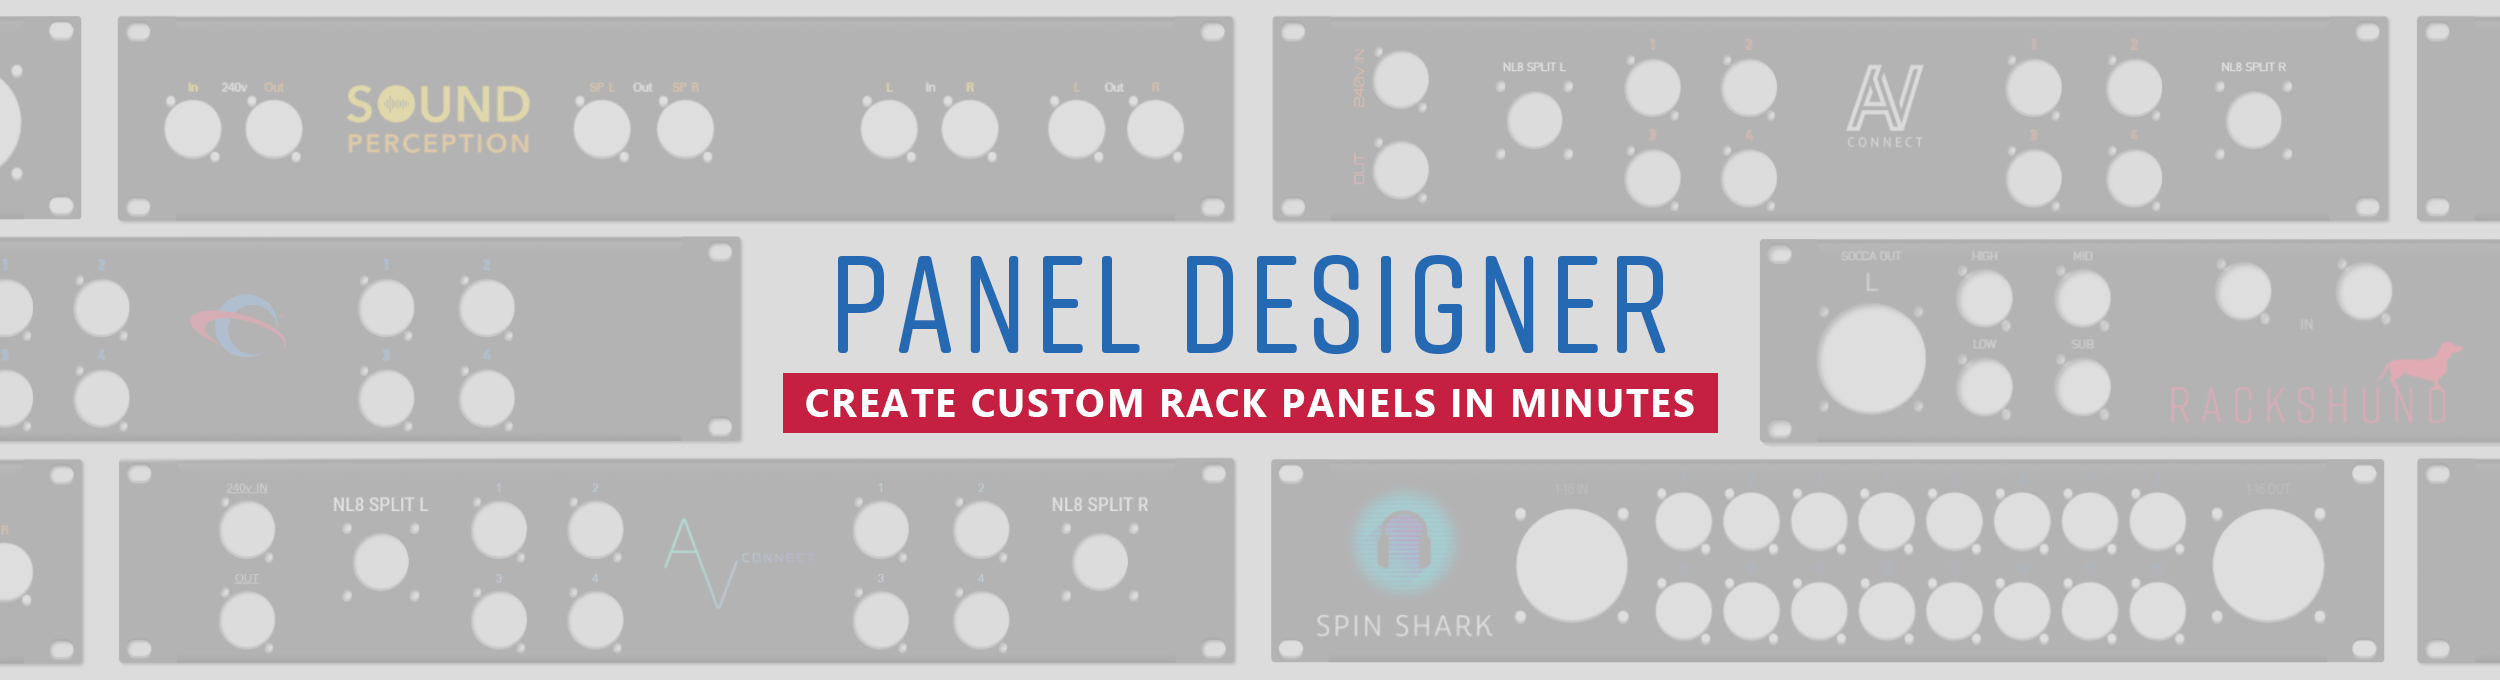 Panel Designer - Create a custom rack in minutes